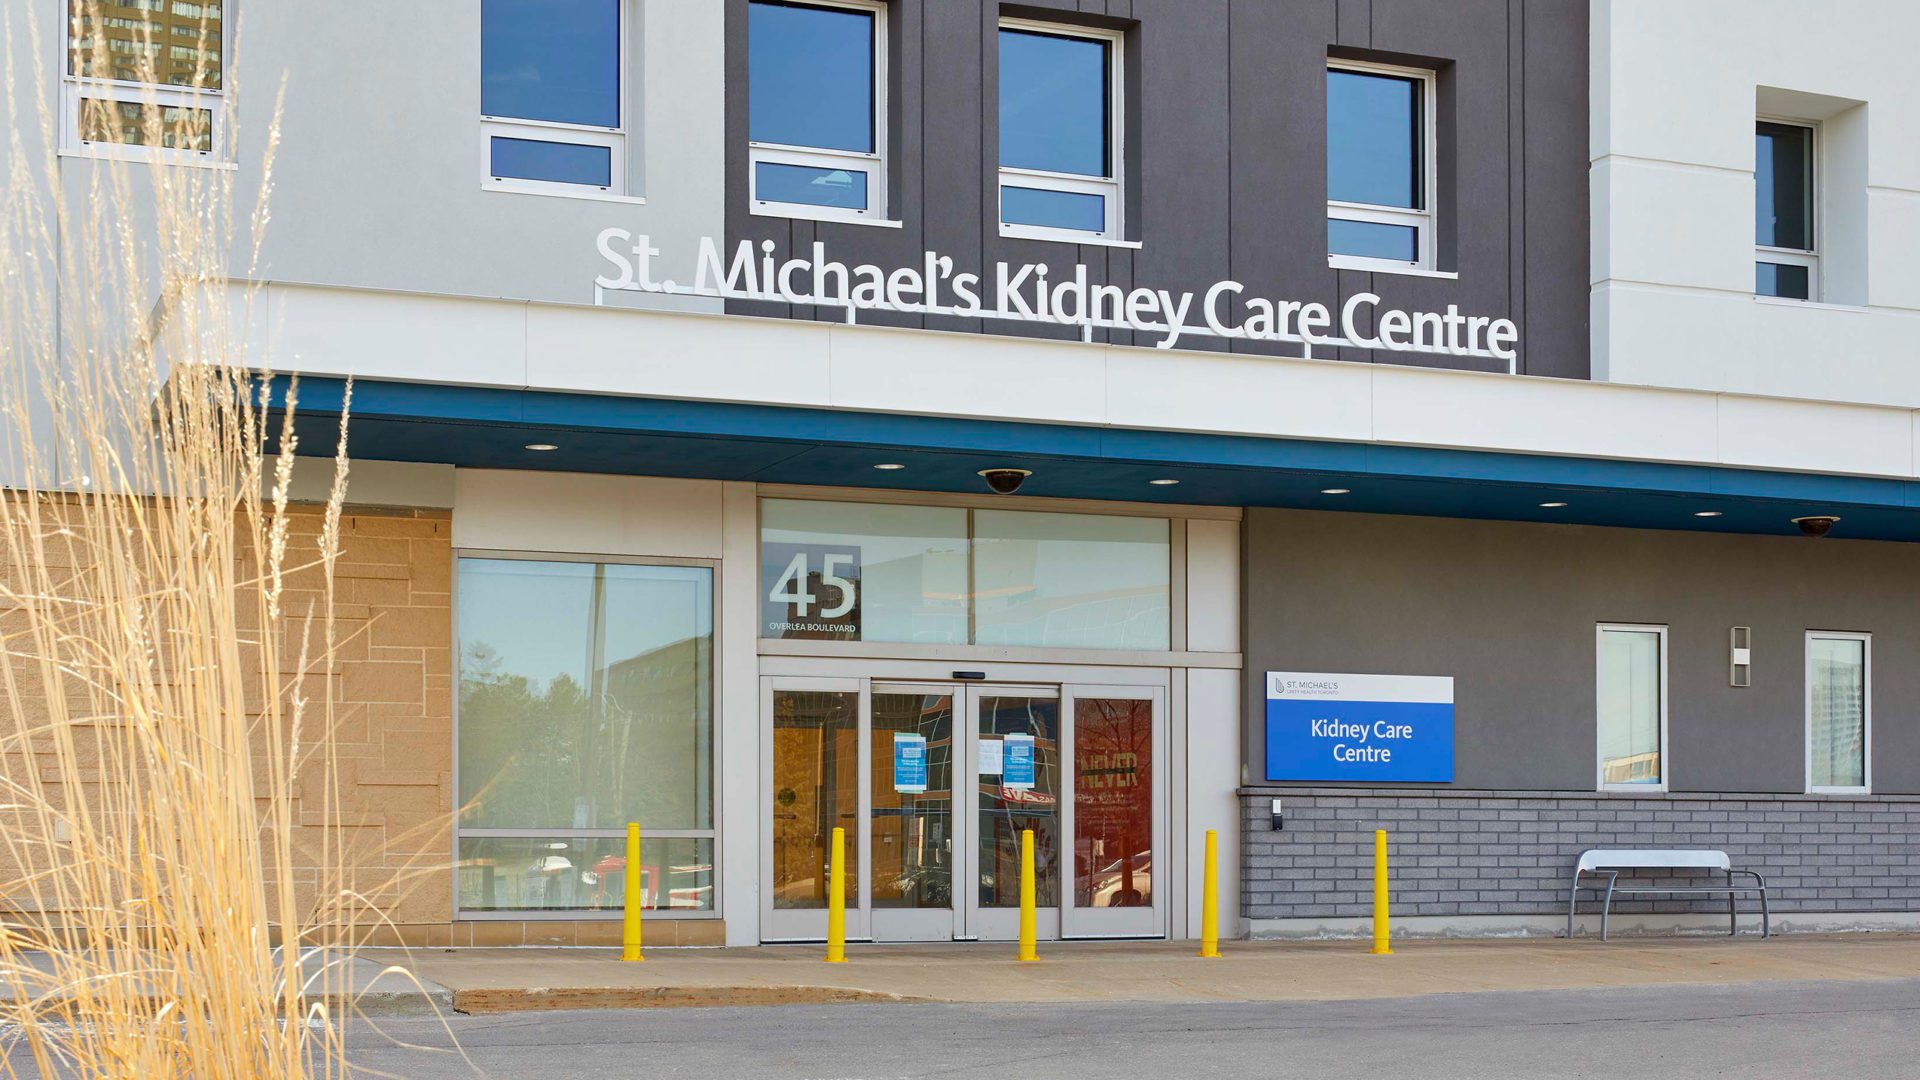 wood door entrance of st. michael's kidney care centre.